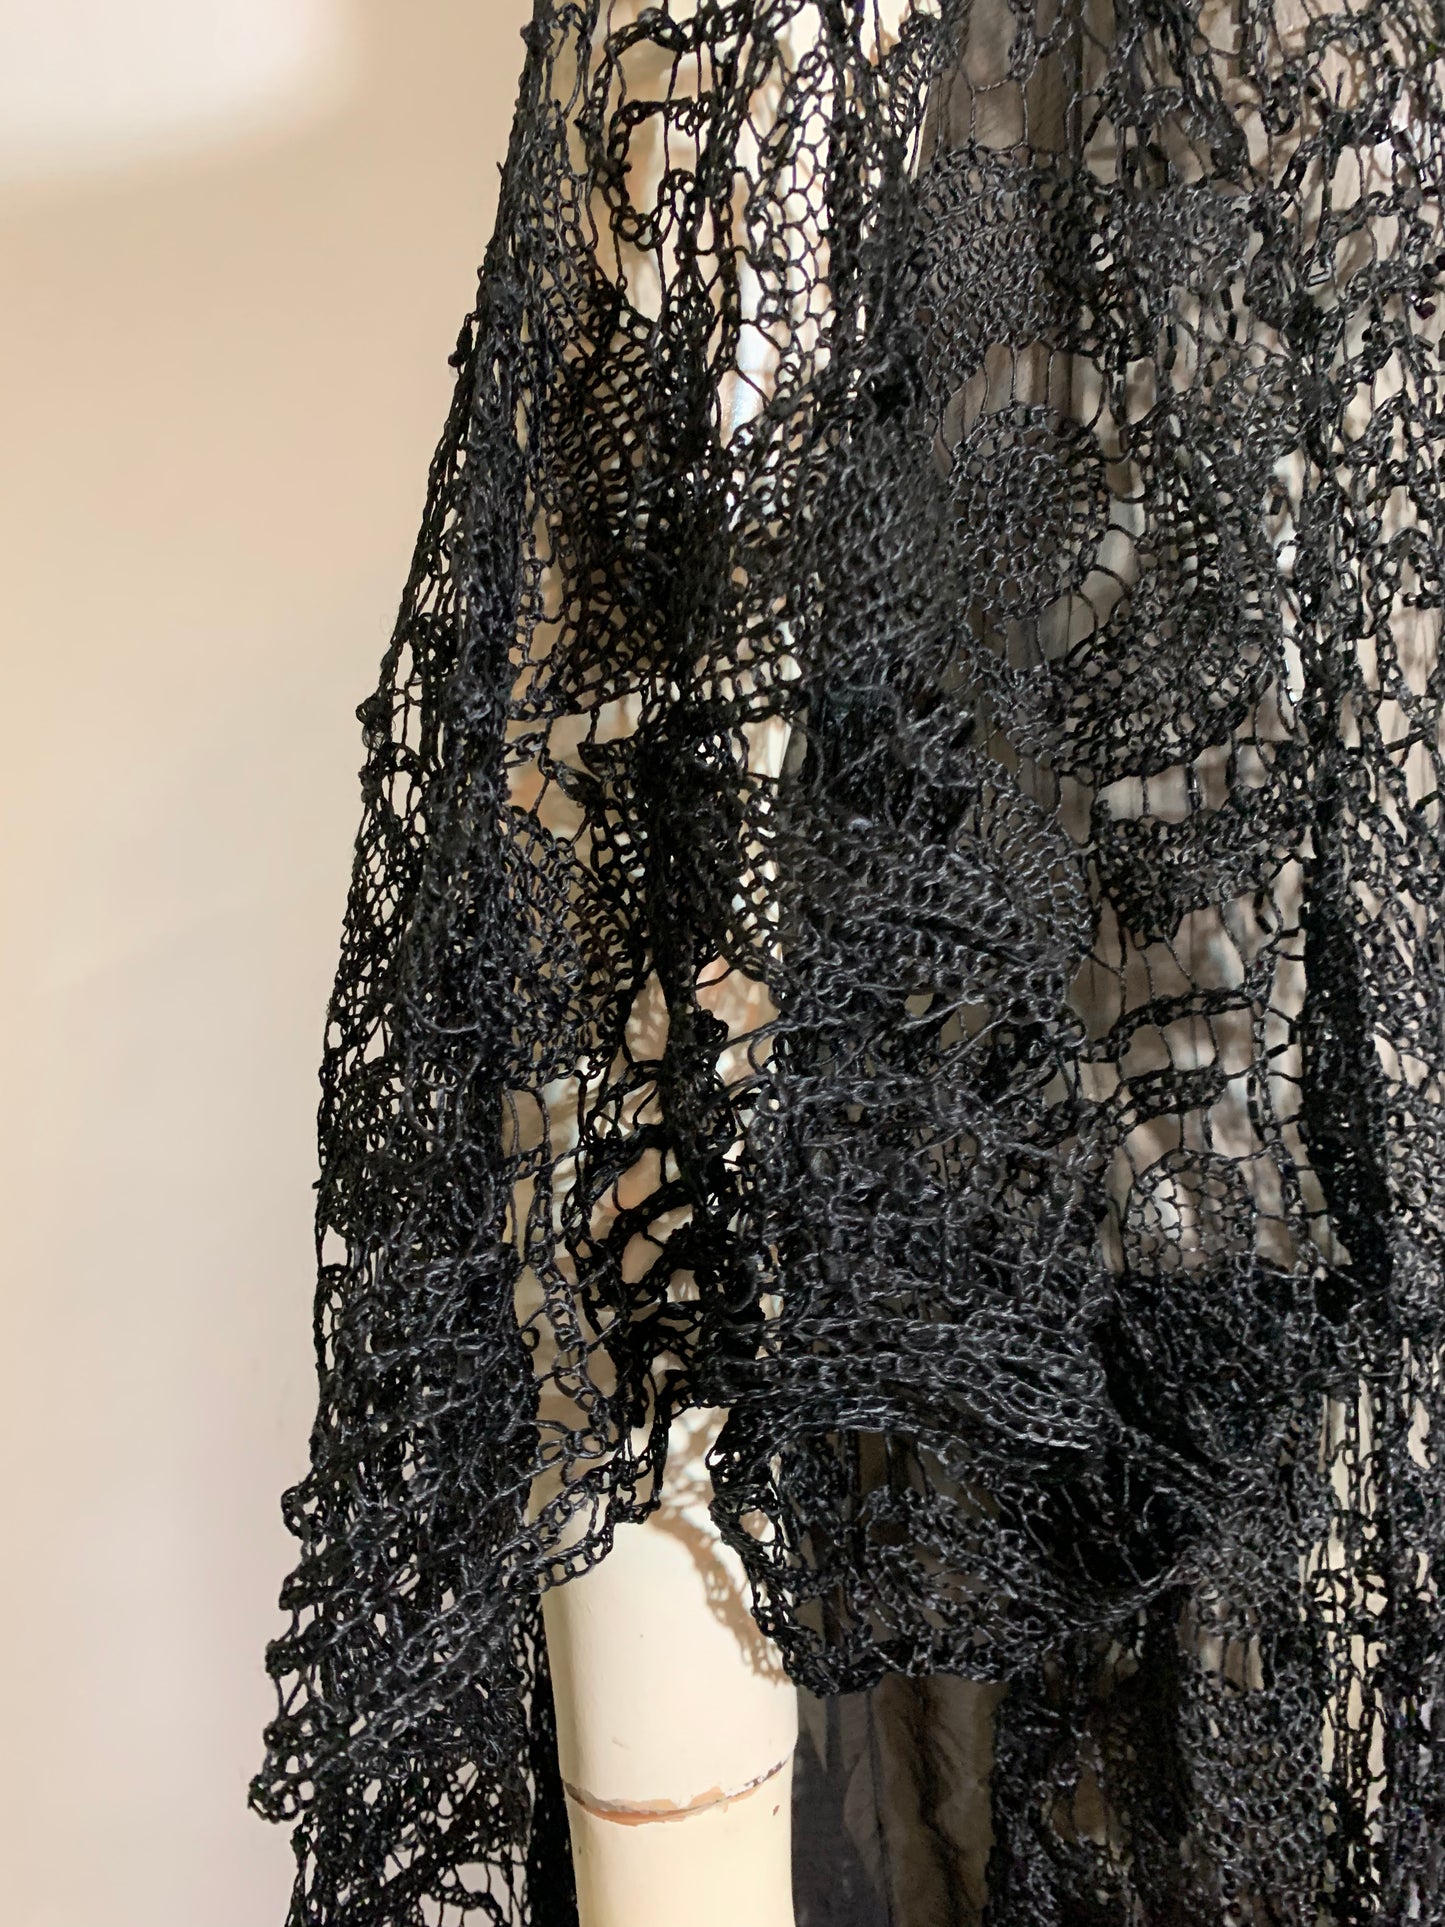 Sheer Black Silk Beaded Dress with Spanish Shawl Inspired Crochet Adornment circa 1920s